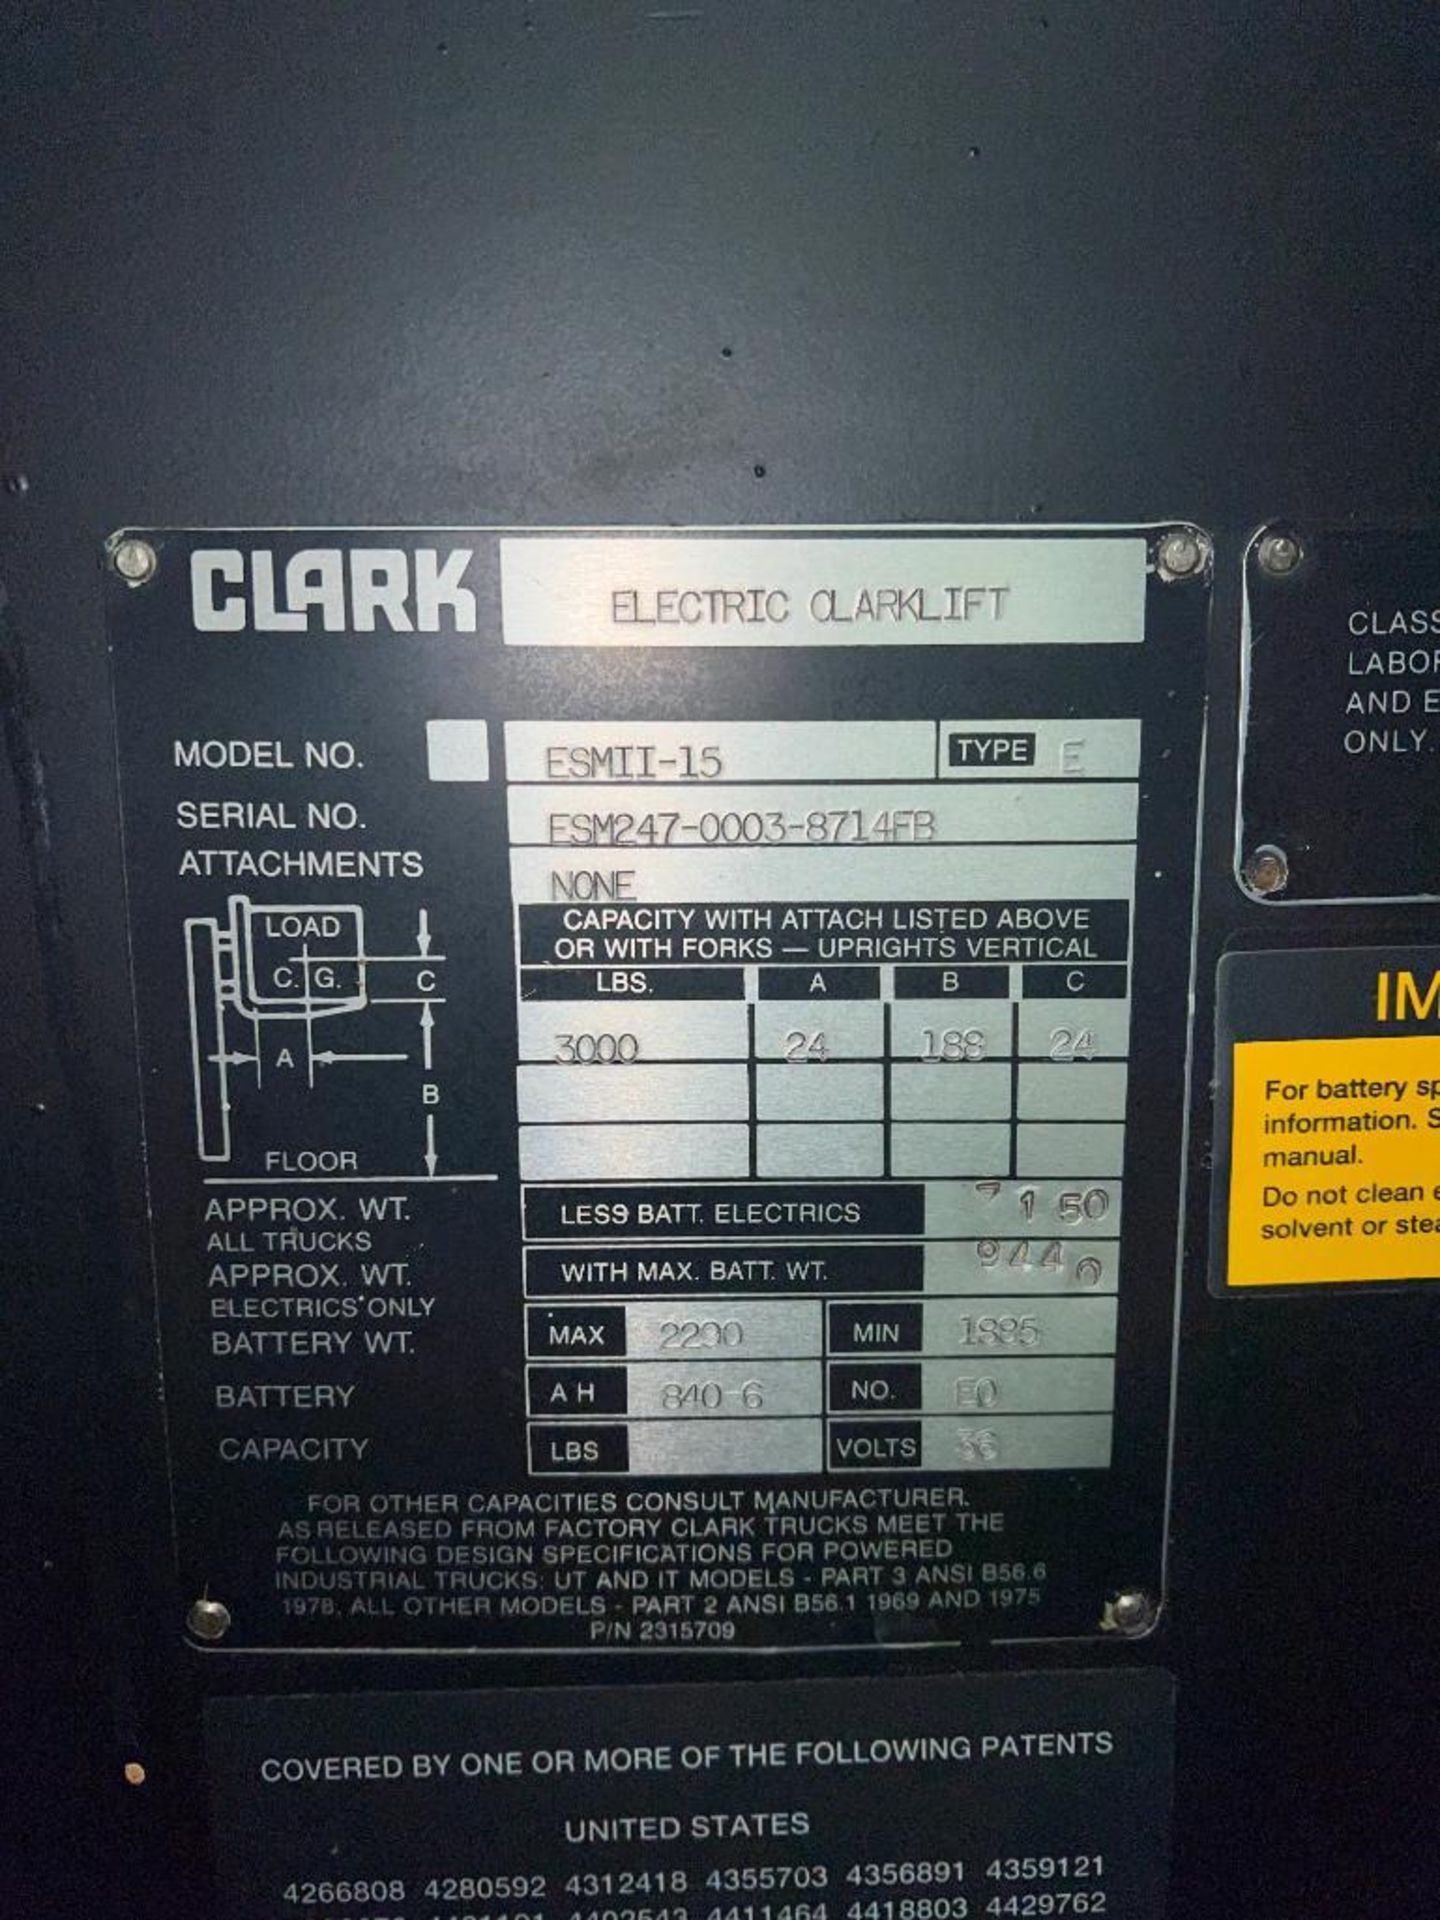 Clark 3,000 LB Capacity, Electric Forklift, Model: ESMII-15, S/N: ESM247-0003-8714FB - Image 2 of 2